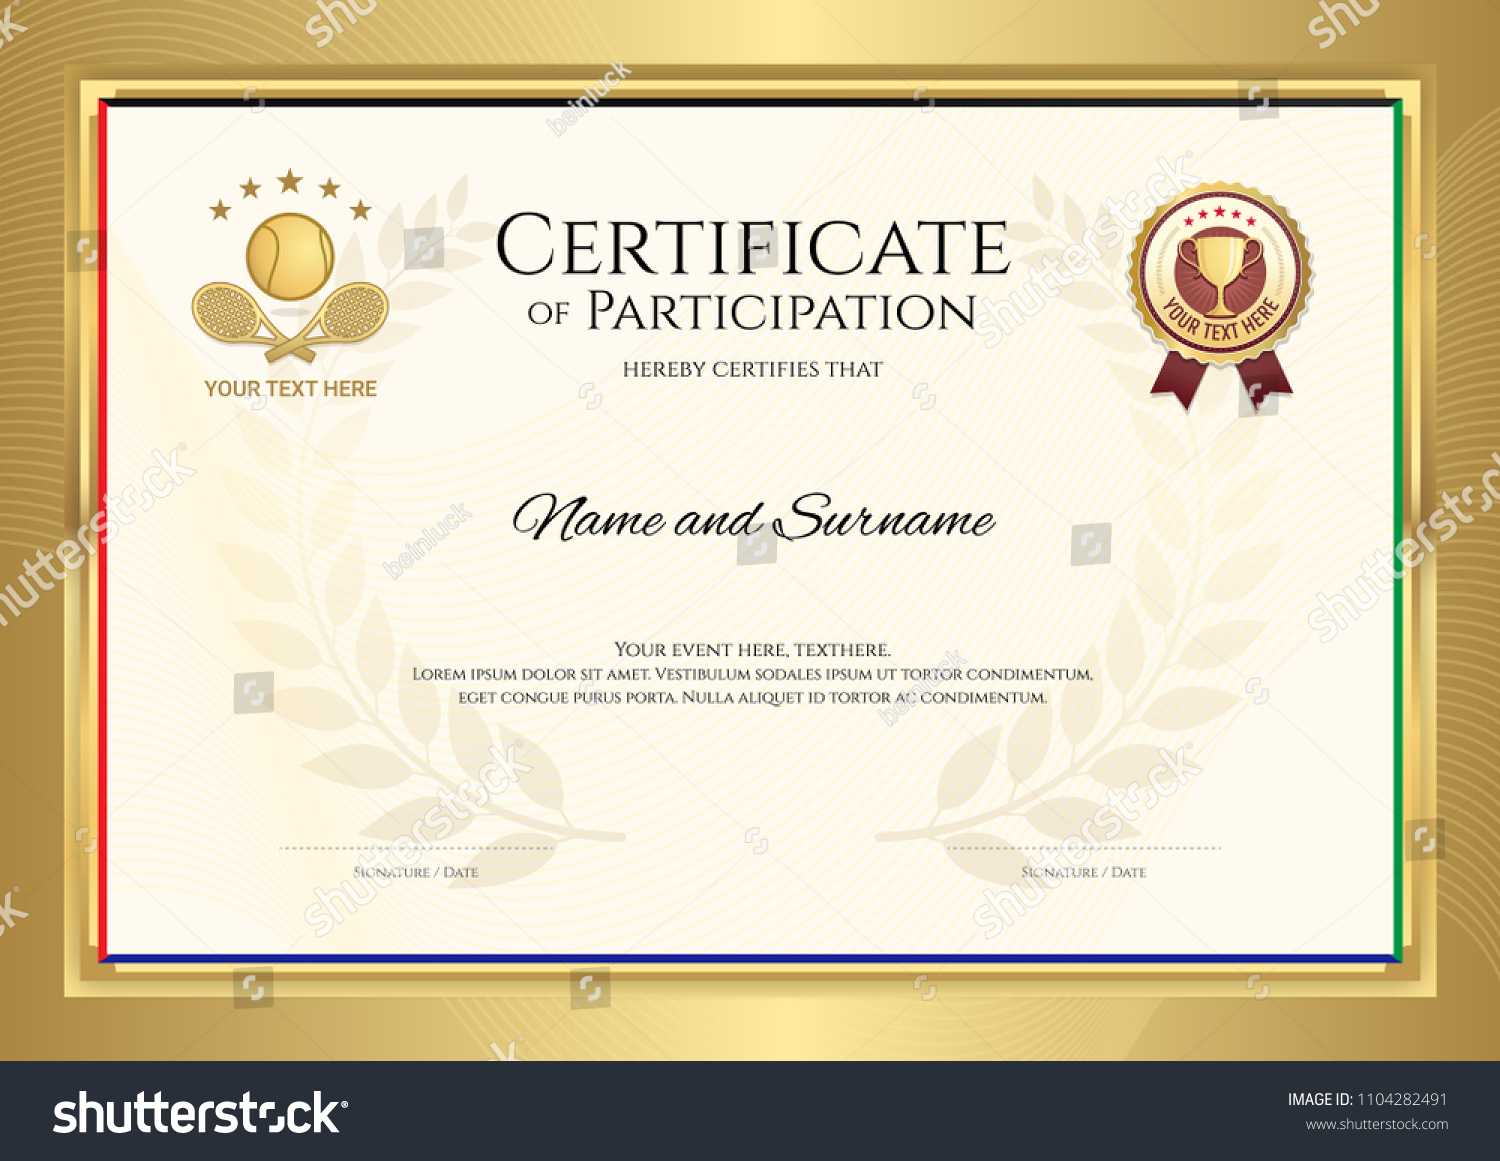 Certificate Template Tennis Sport Theme Gold Stock Image For Tennis Certificate Template Free